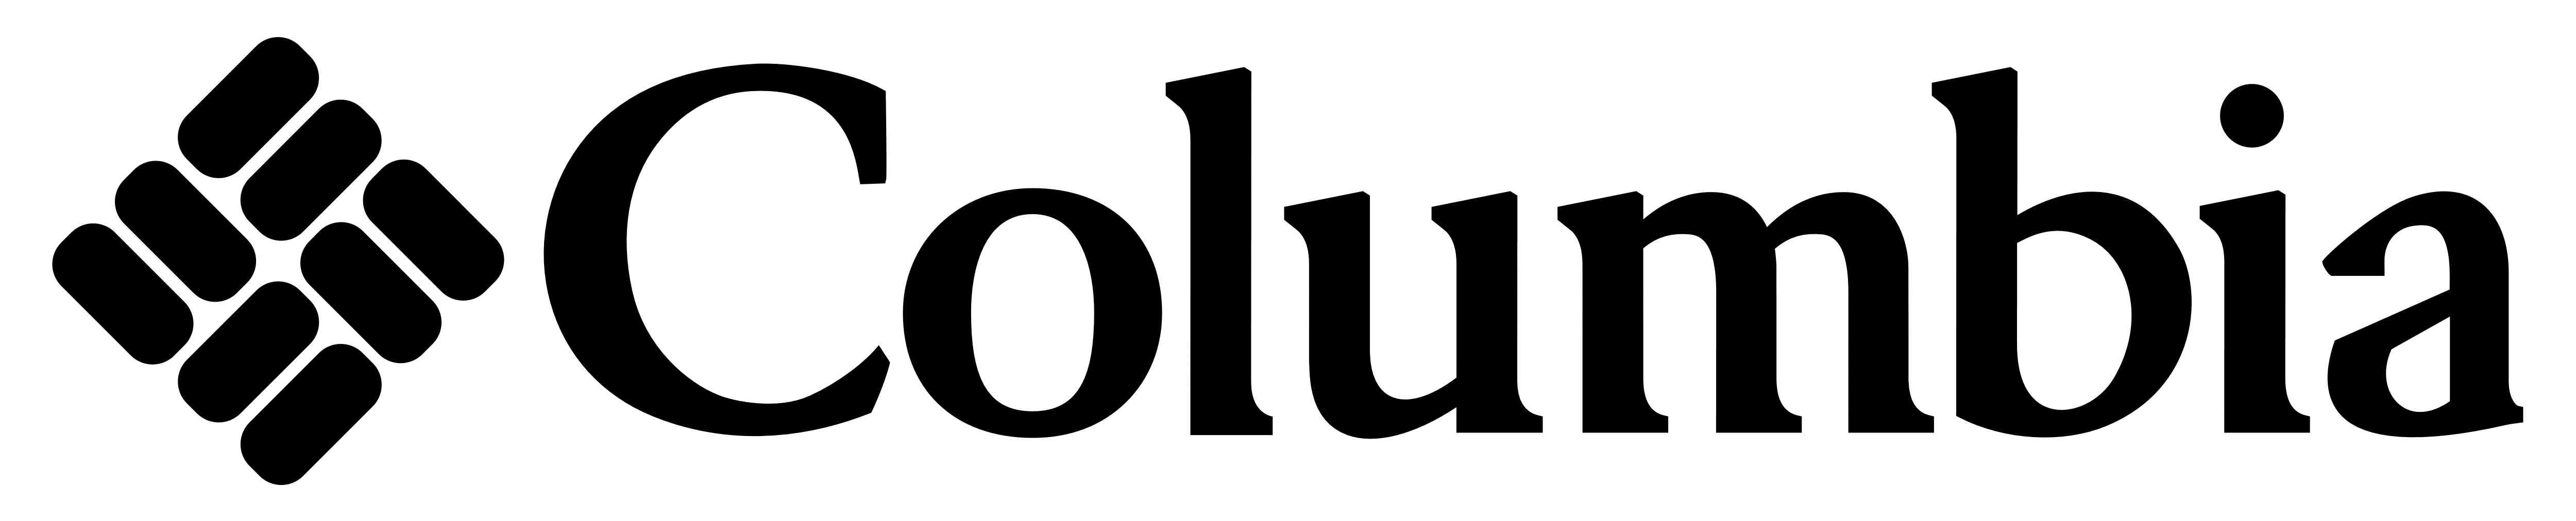 Columbia Pictures Logo - Columbia – Logos Download